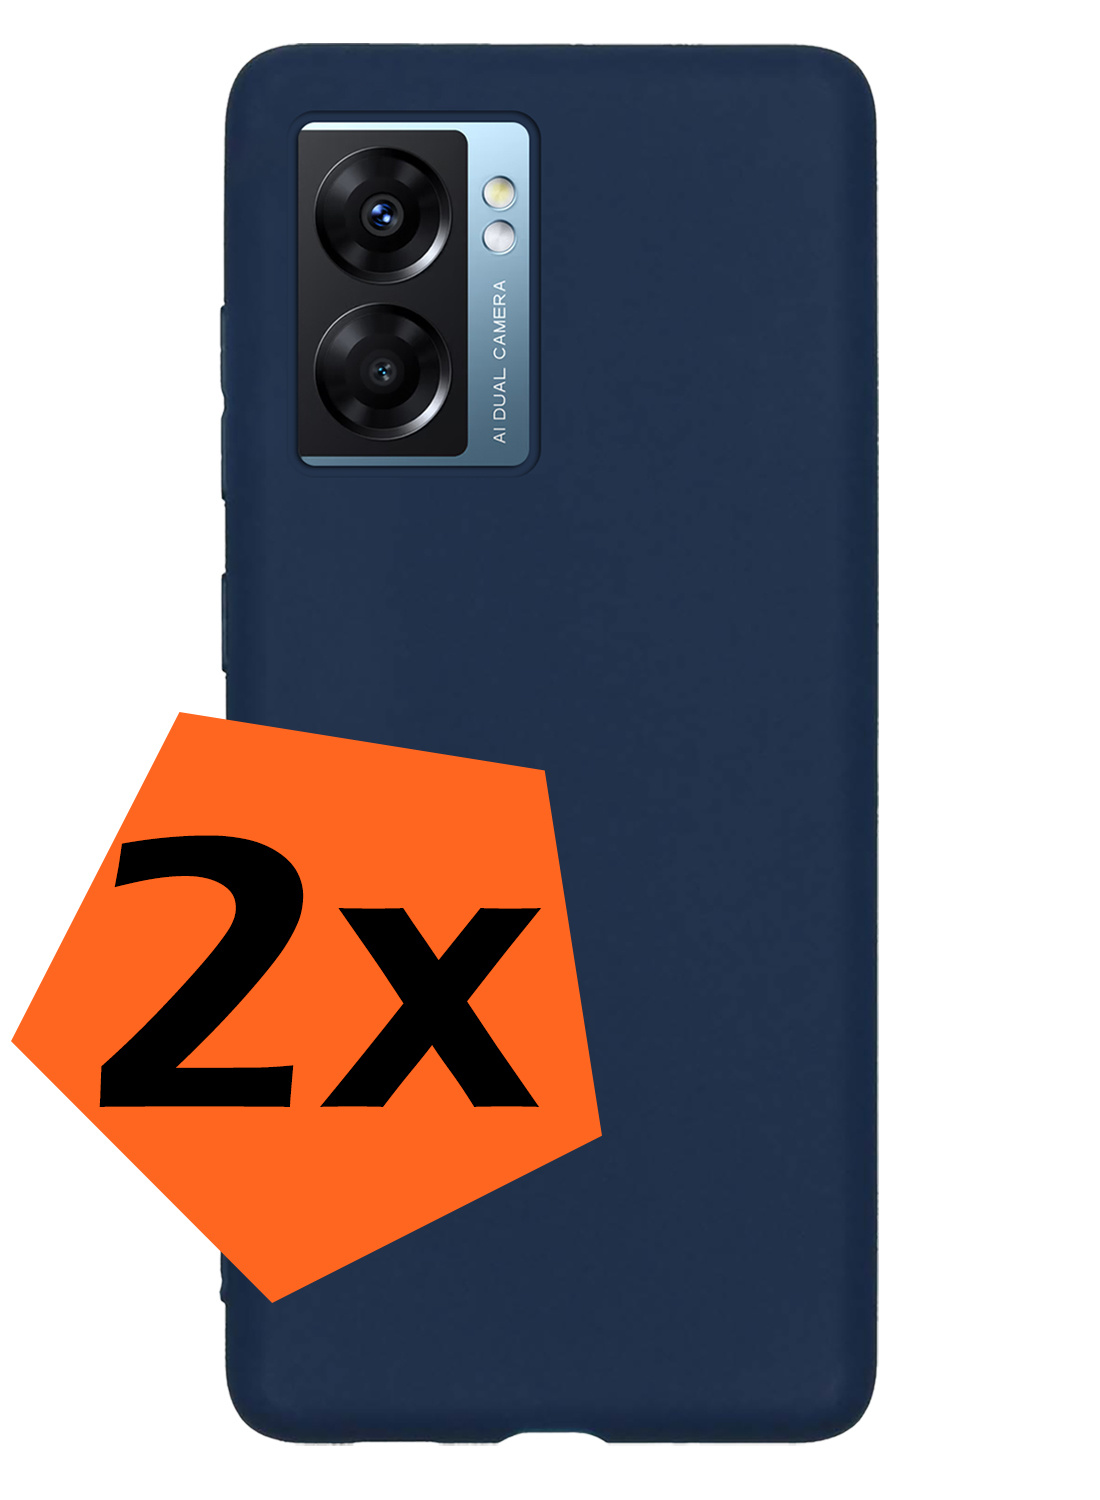 Nomfy Hoesje Geschikt voor OPPO A77 Hoesje Siliconen Cover Case - Hoes Geschikt voor OPPO A77 Hoes Back Case - 2-PACK - Donkerblauw